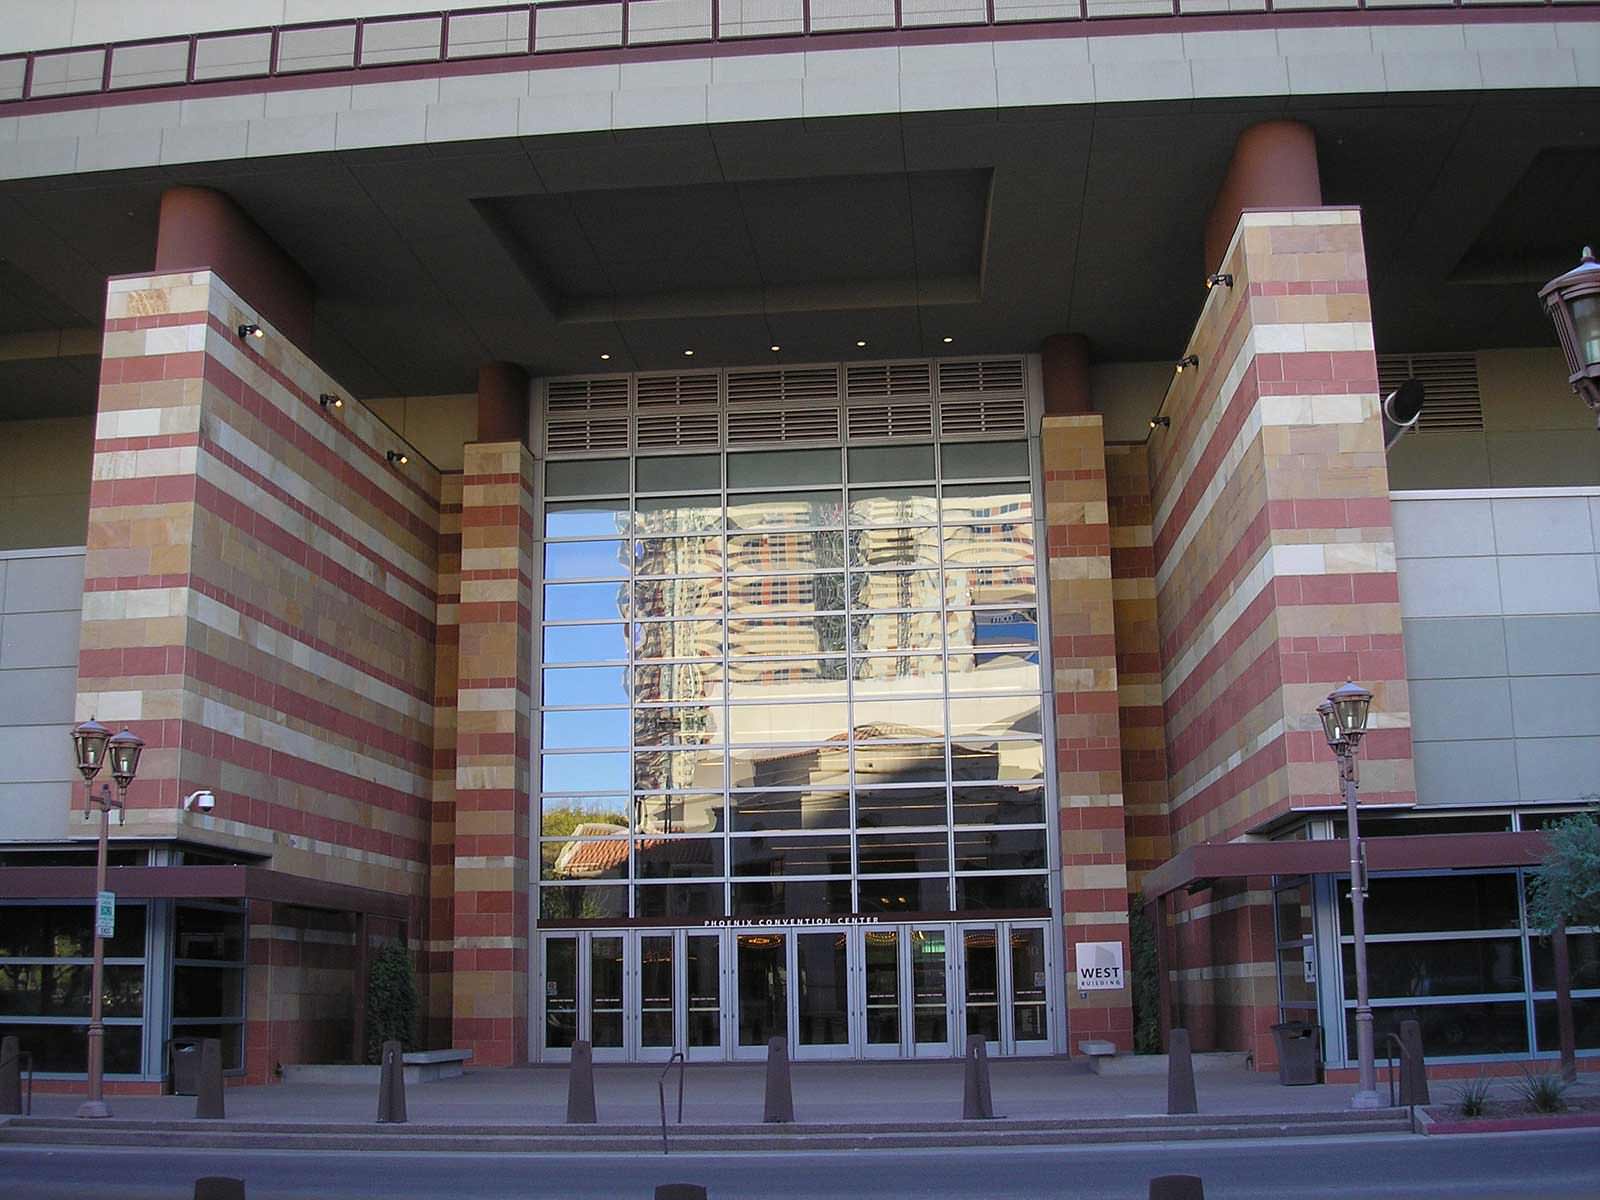 Phoenix Convention Center